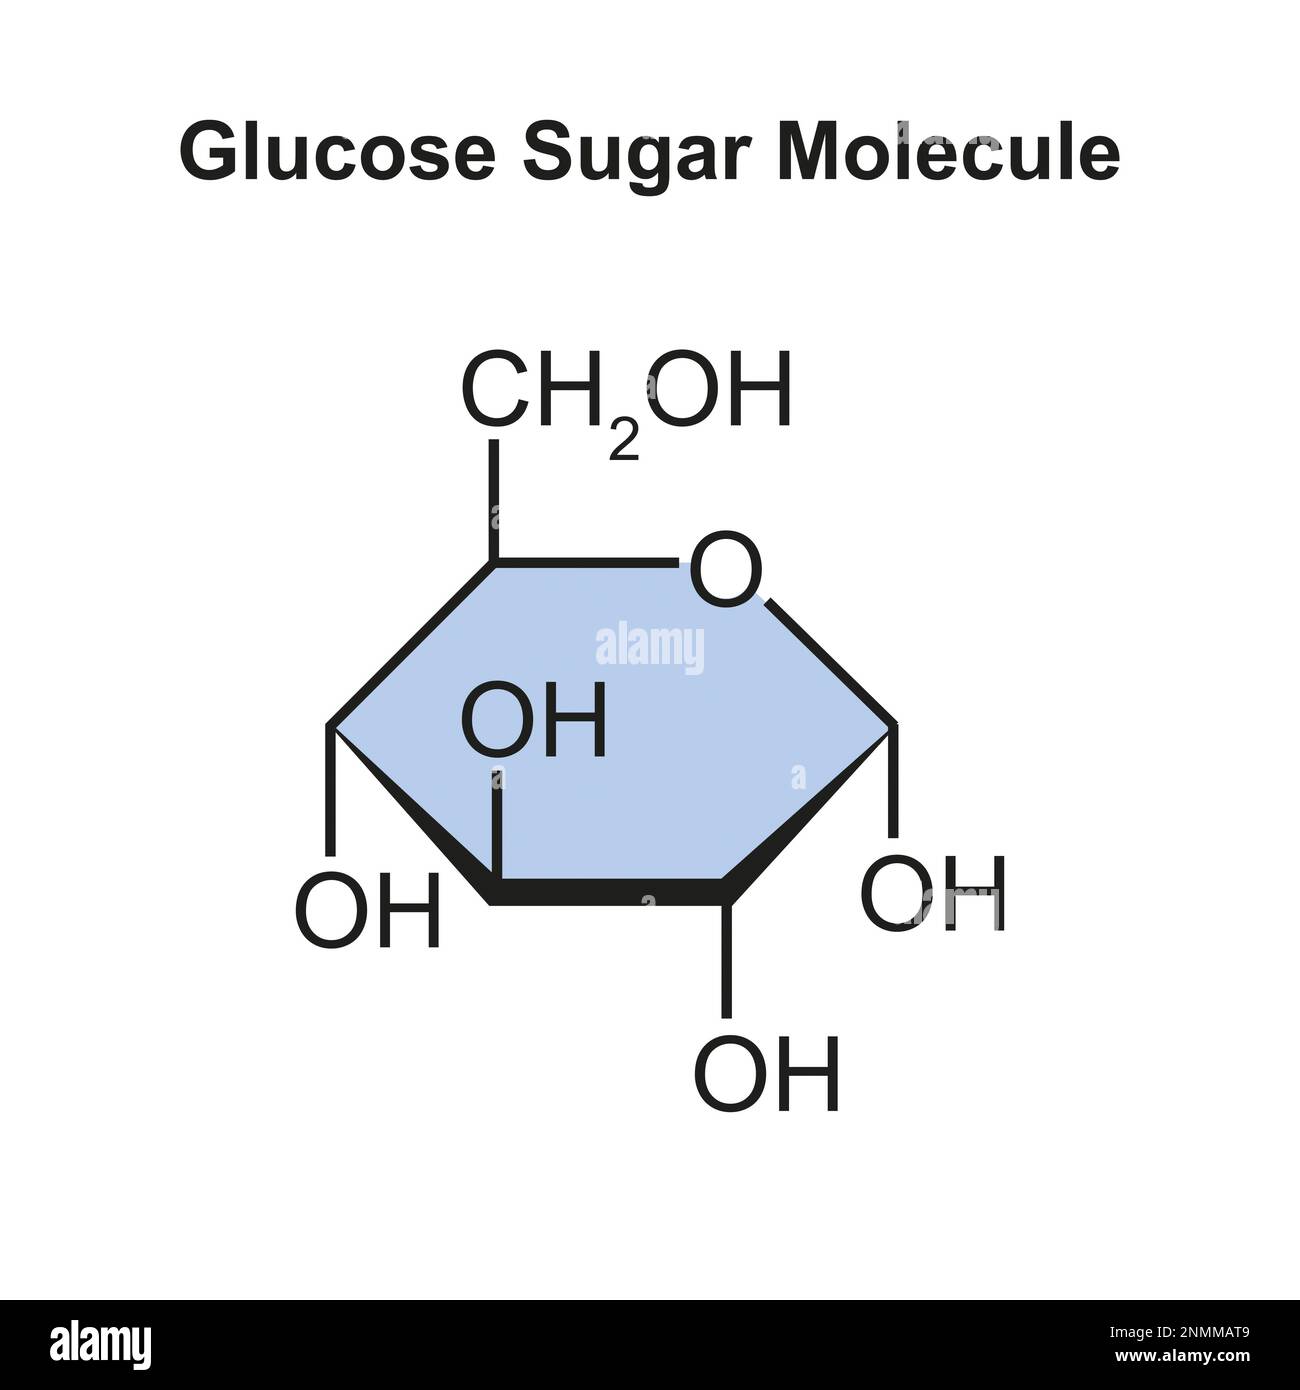 Glucose sugar molecule, illustration Stock Photo